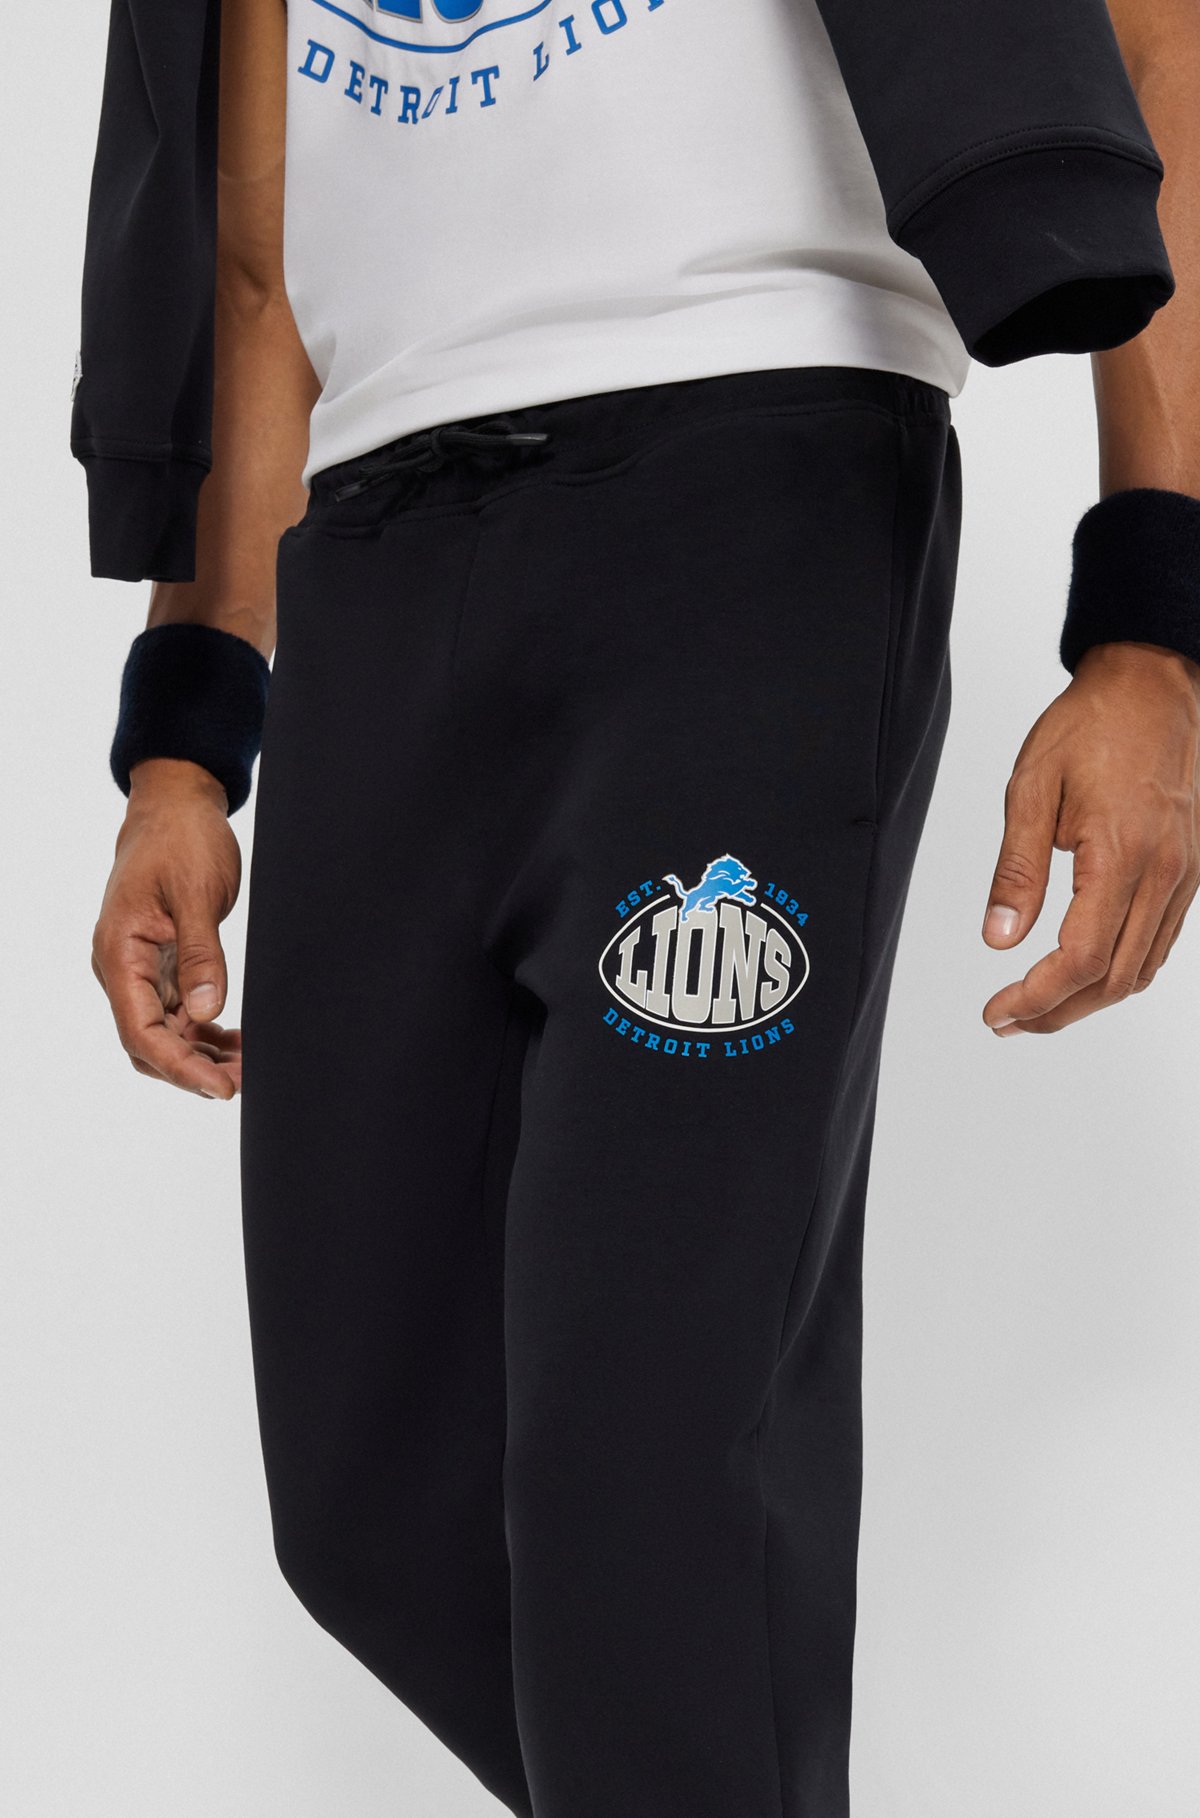 Pantalones de chándal BOSS x NFL de mezcla de algodón con detalle de la colaboración, Lions